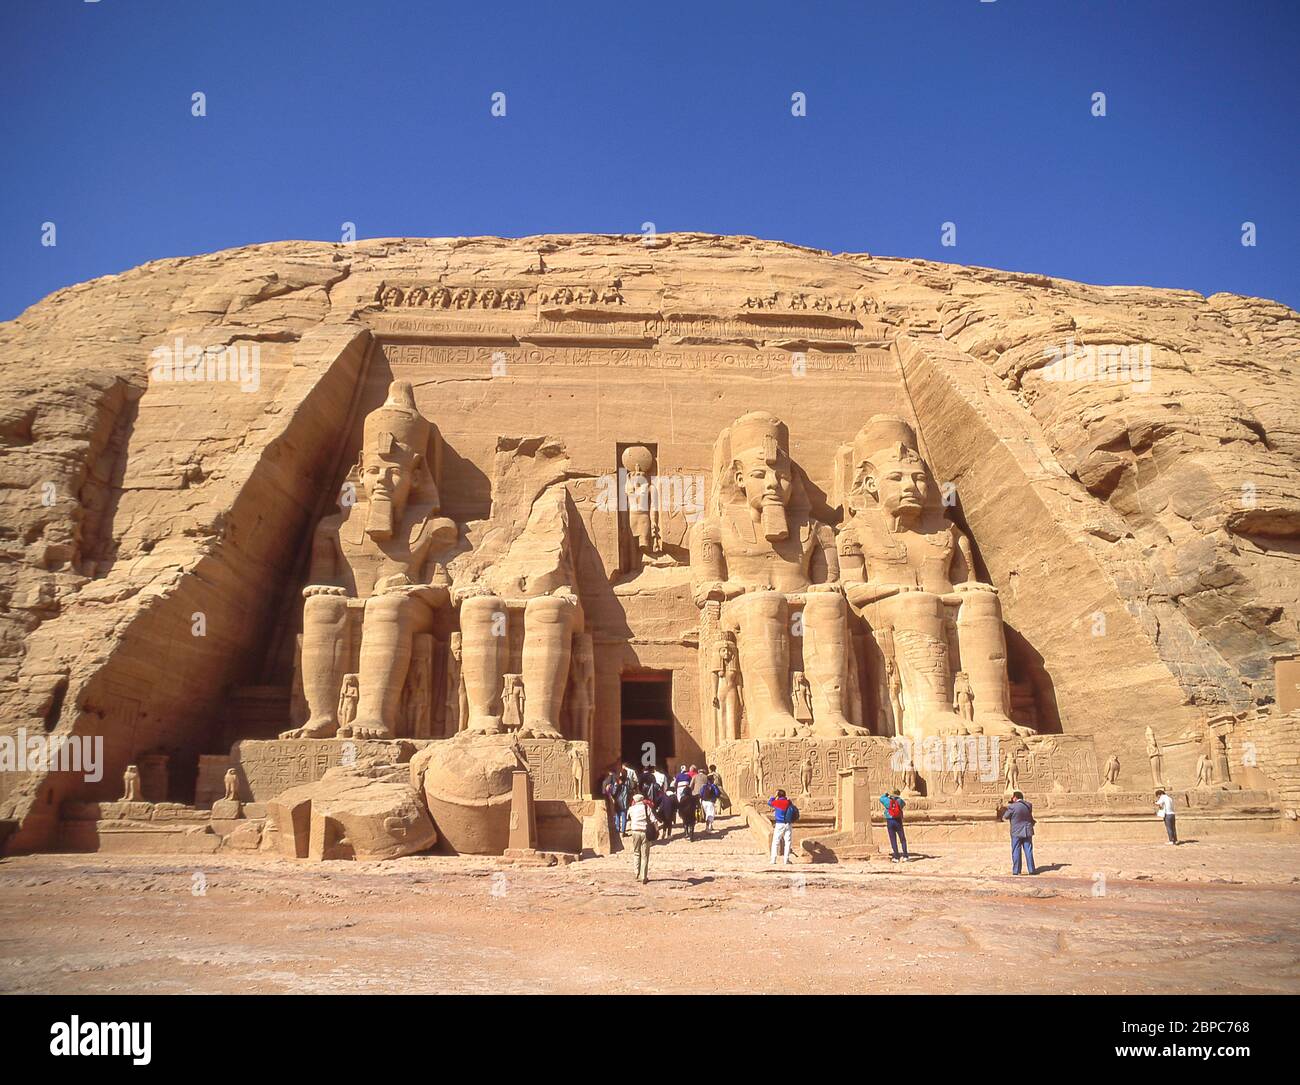 Great Temple of Ramses II, Abu Simbel, Aswan Governorate, Republic of Egypt Stock Photo